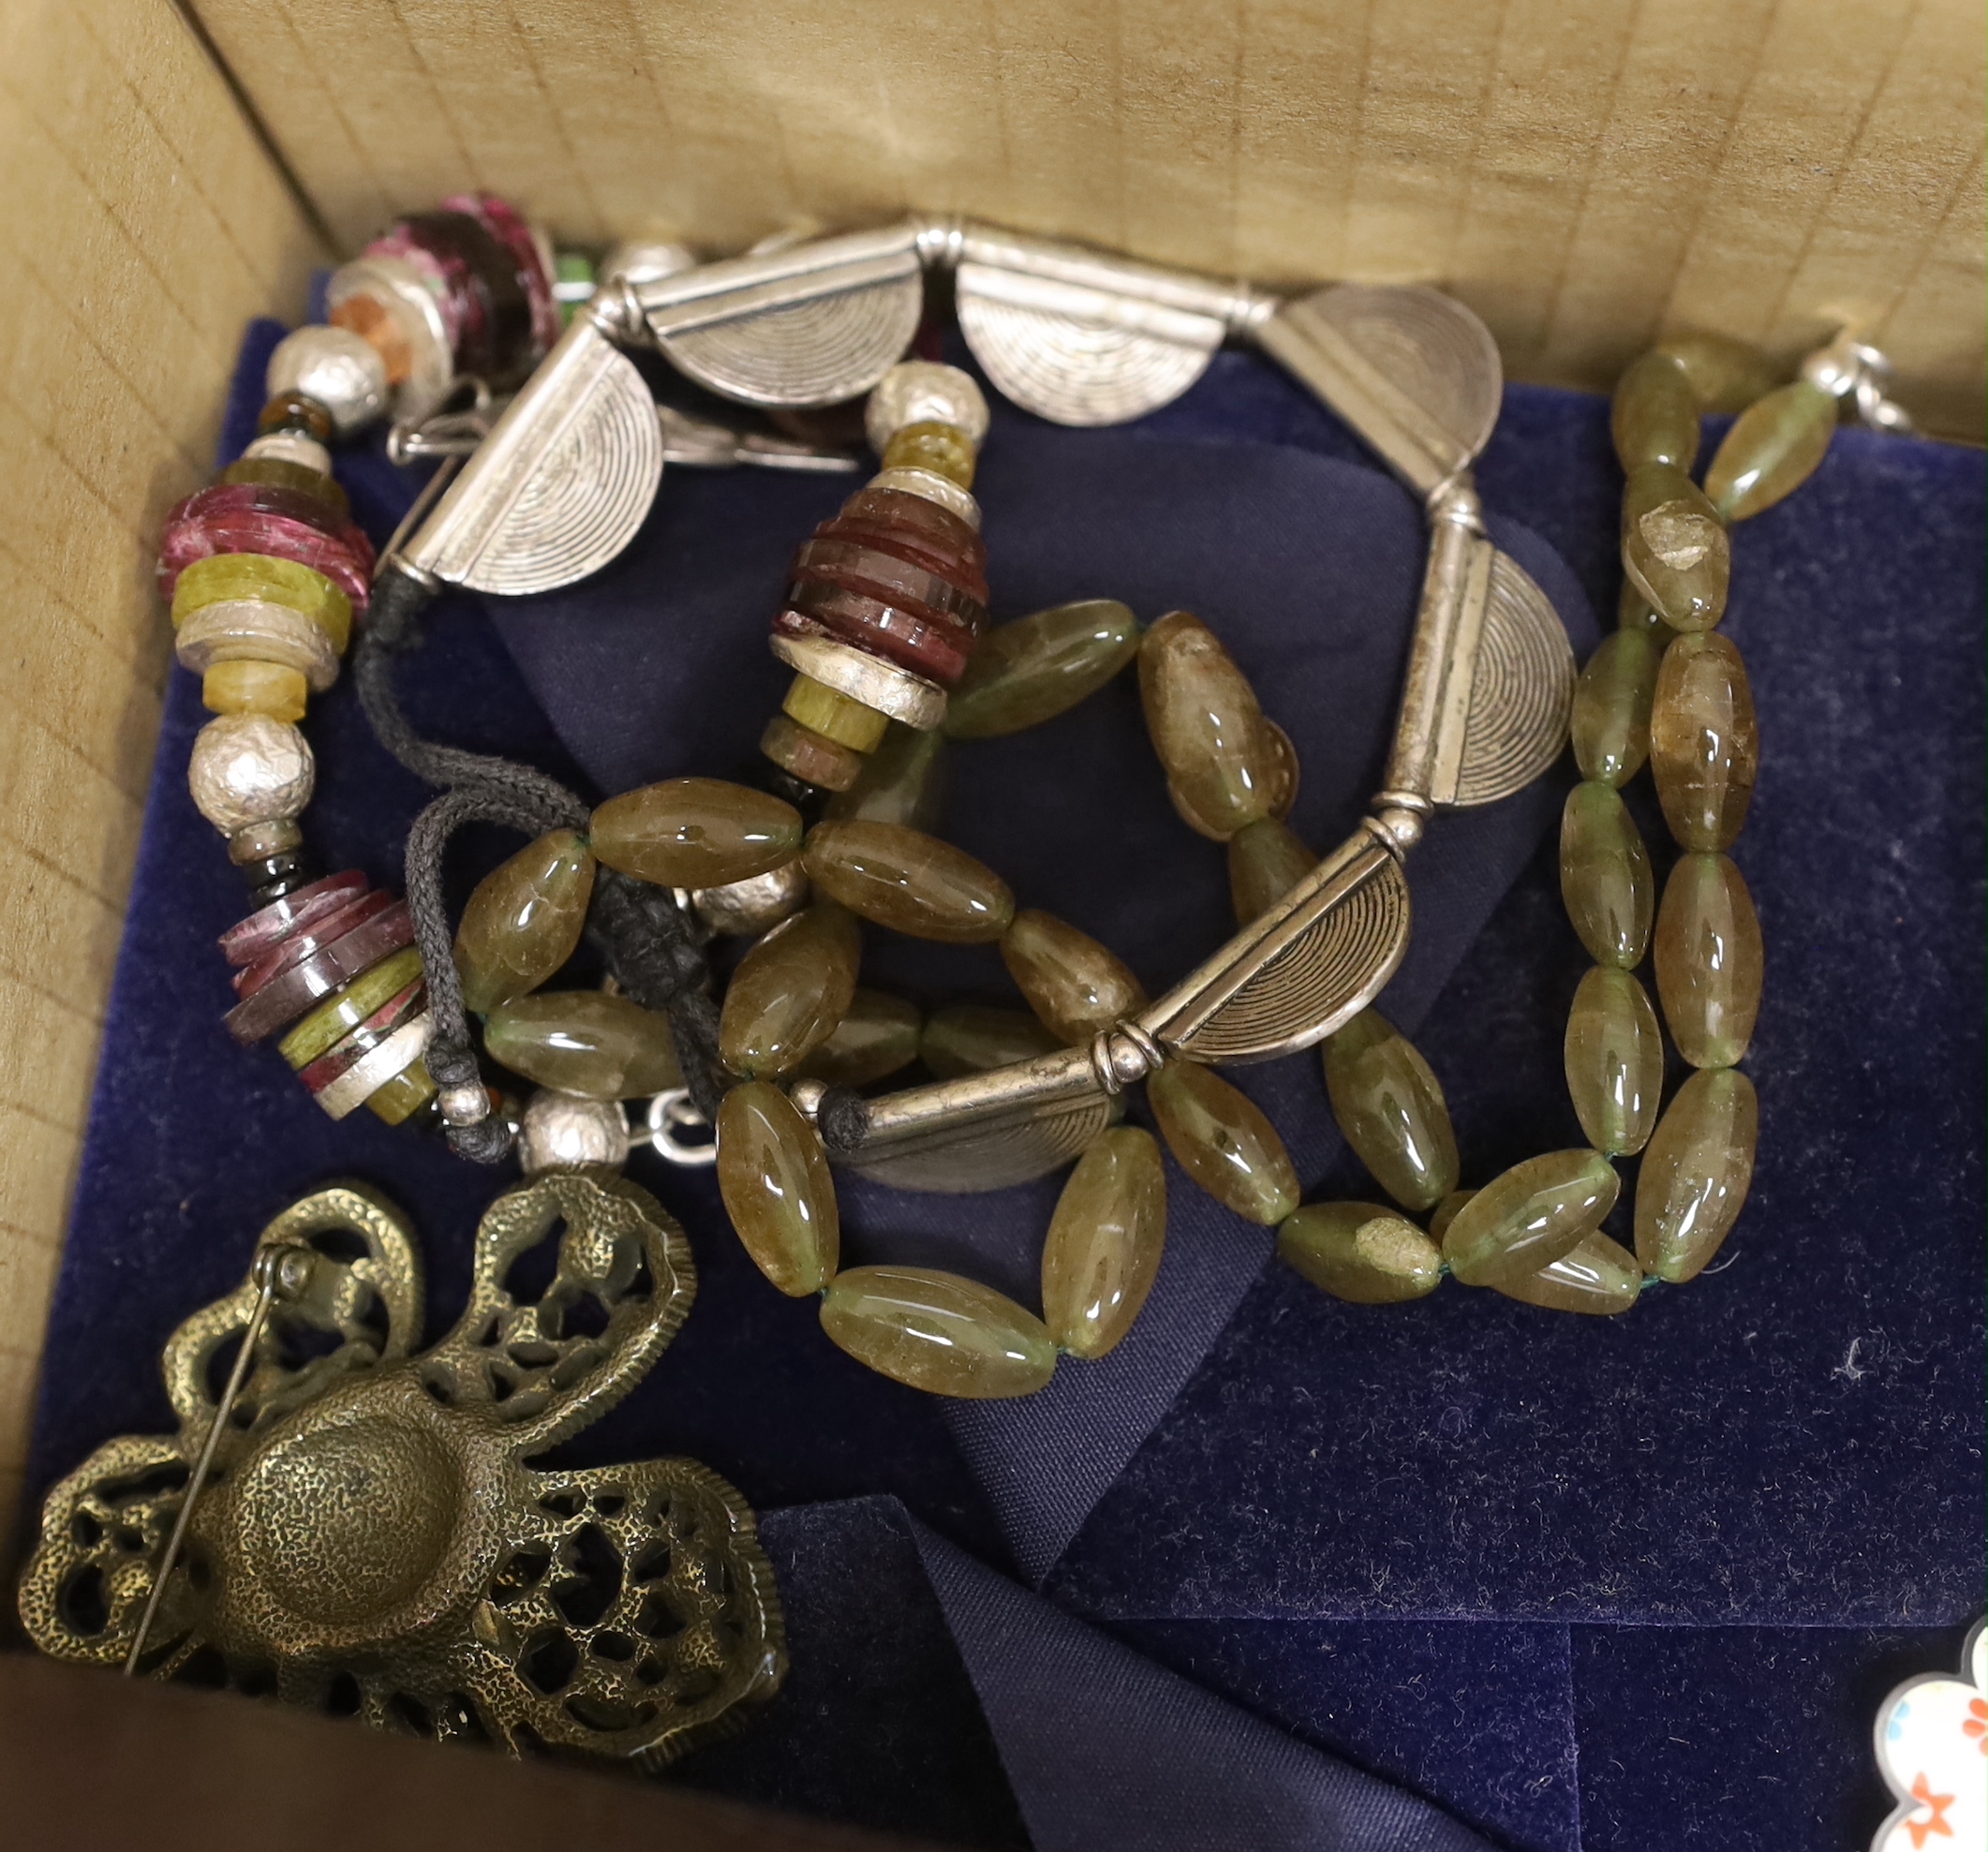 Sundry modern jewellery including moss agate necklace, earrings, necklets, earrings, etc.